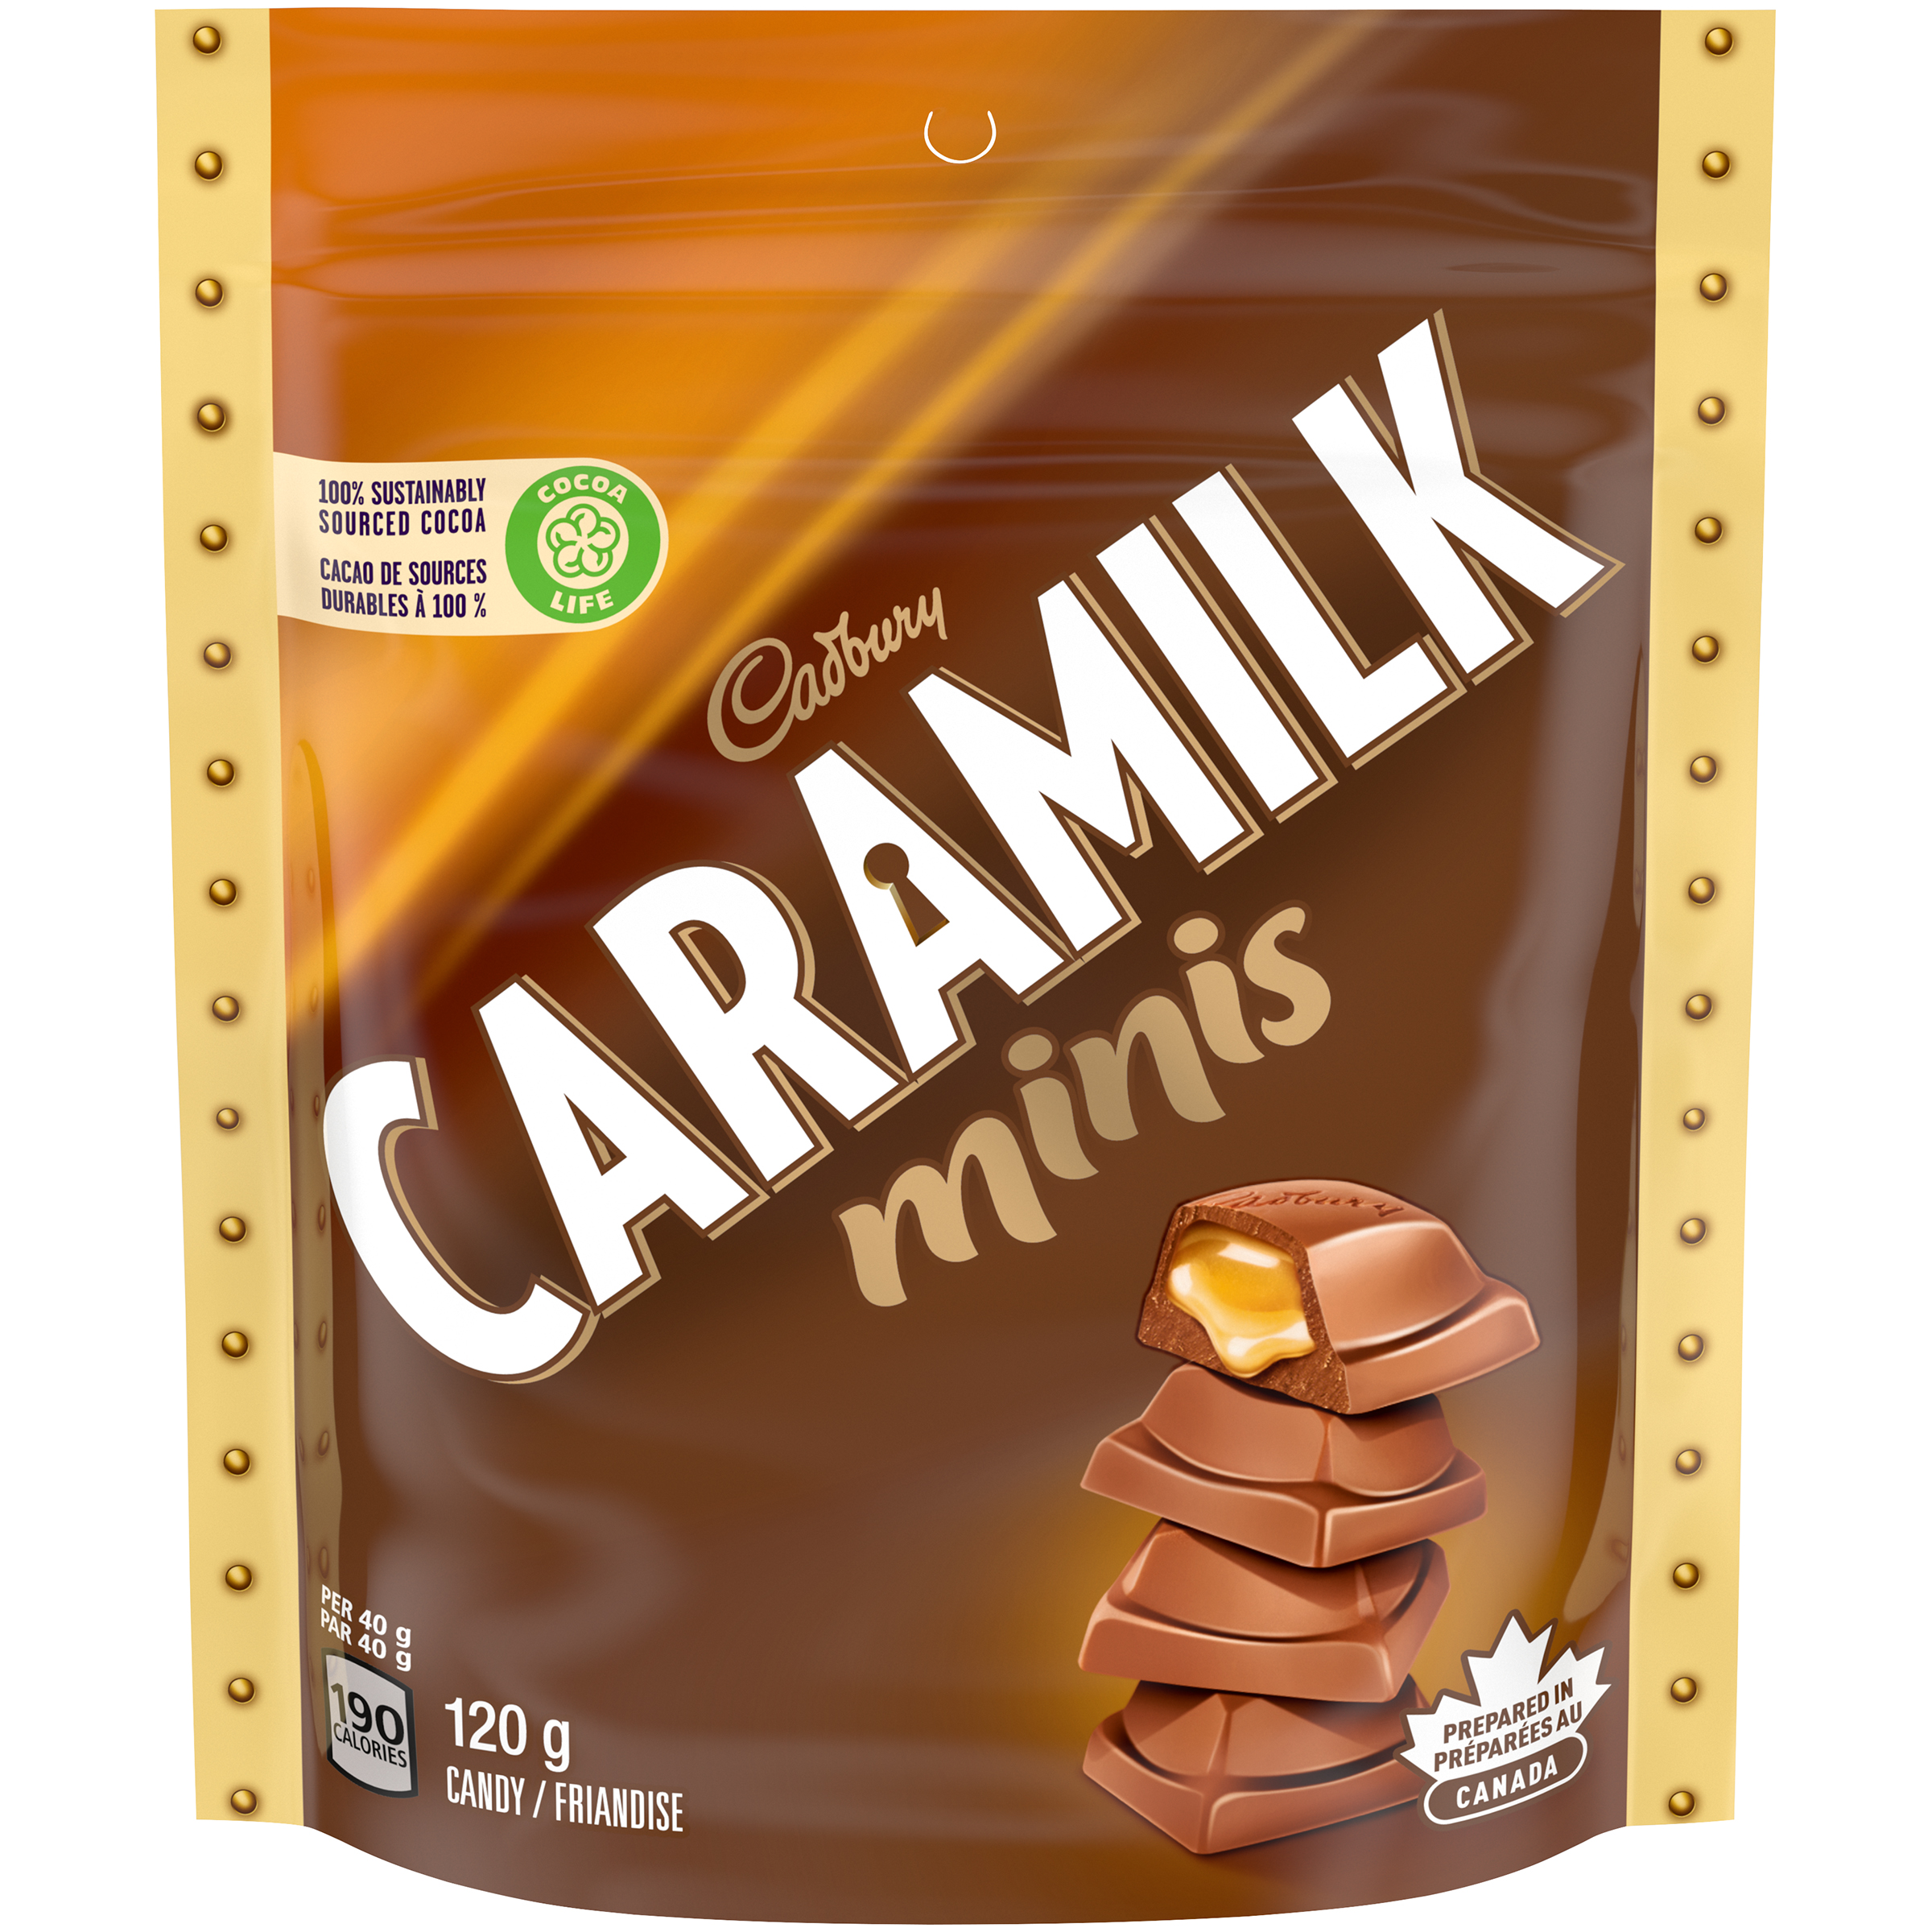 Cadbury Caramilk Minis (120g)